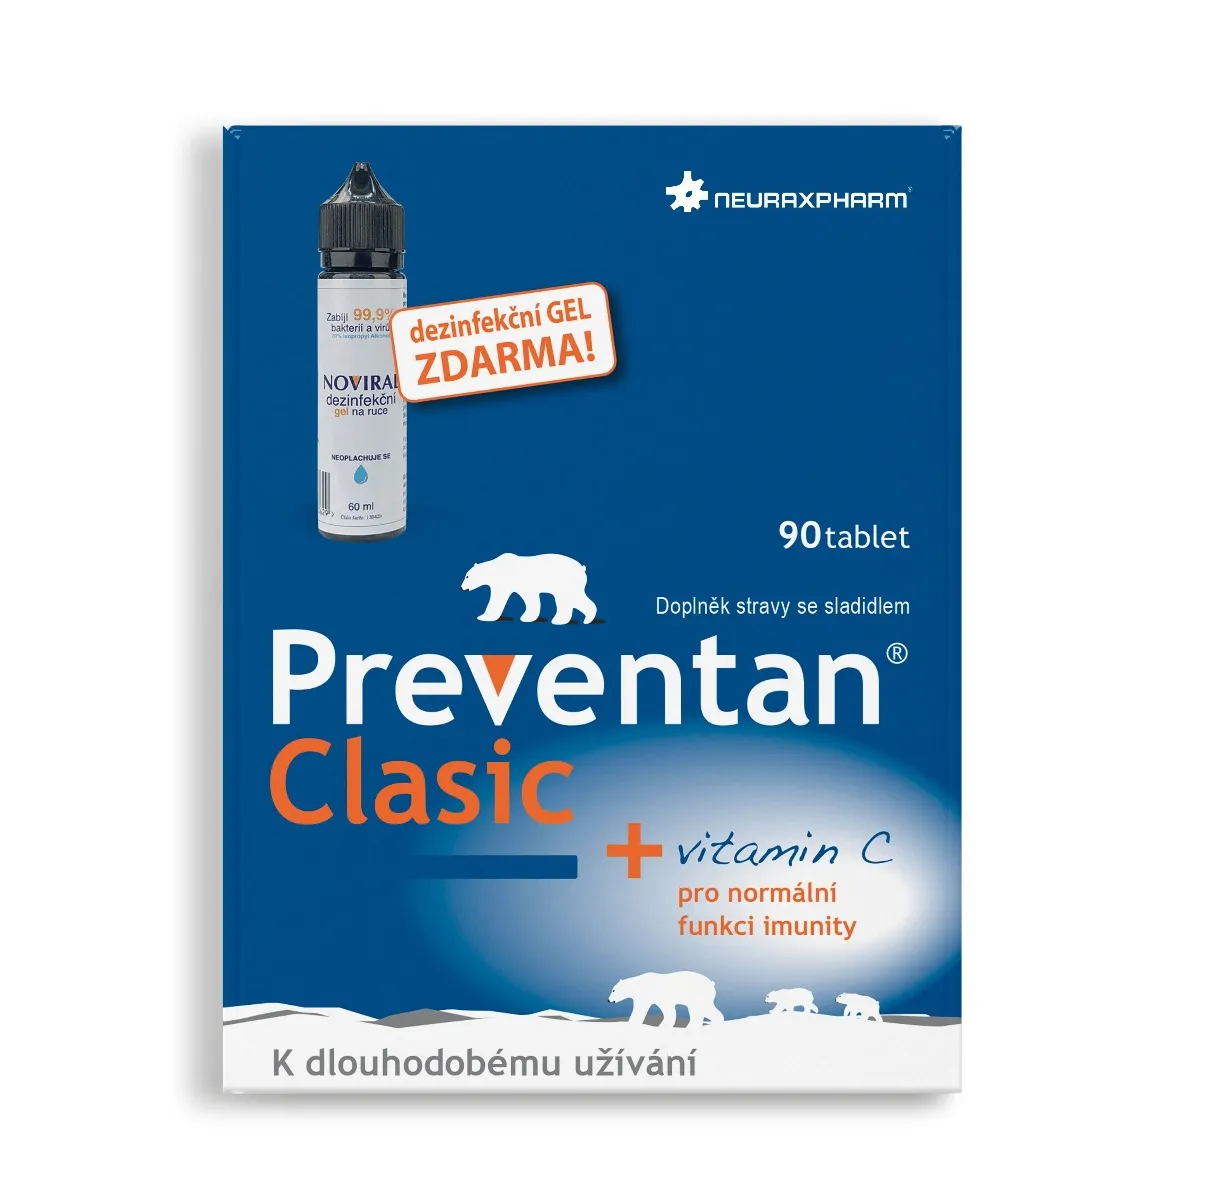 Preventan Clasic 90 tablet + dezinfekční gel